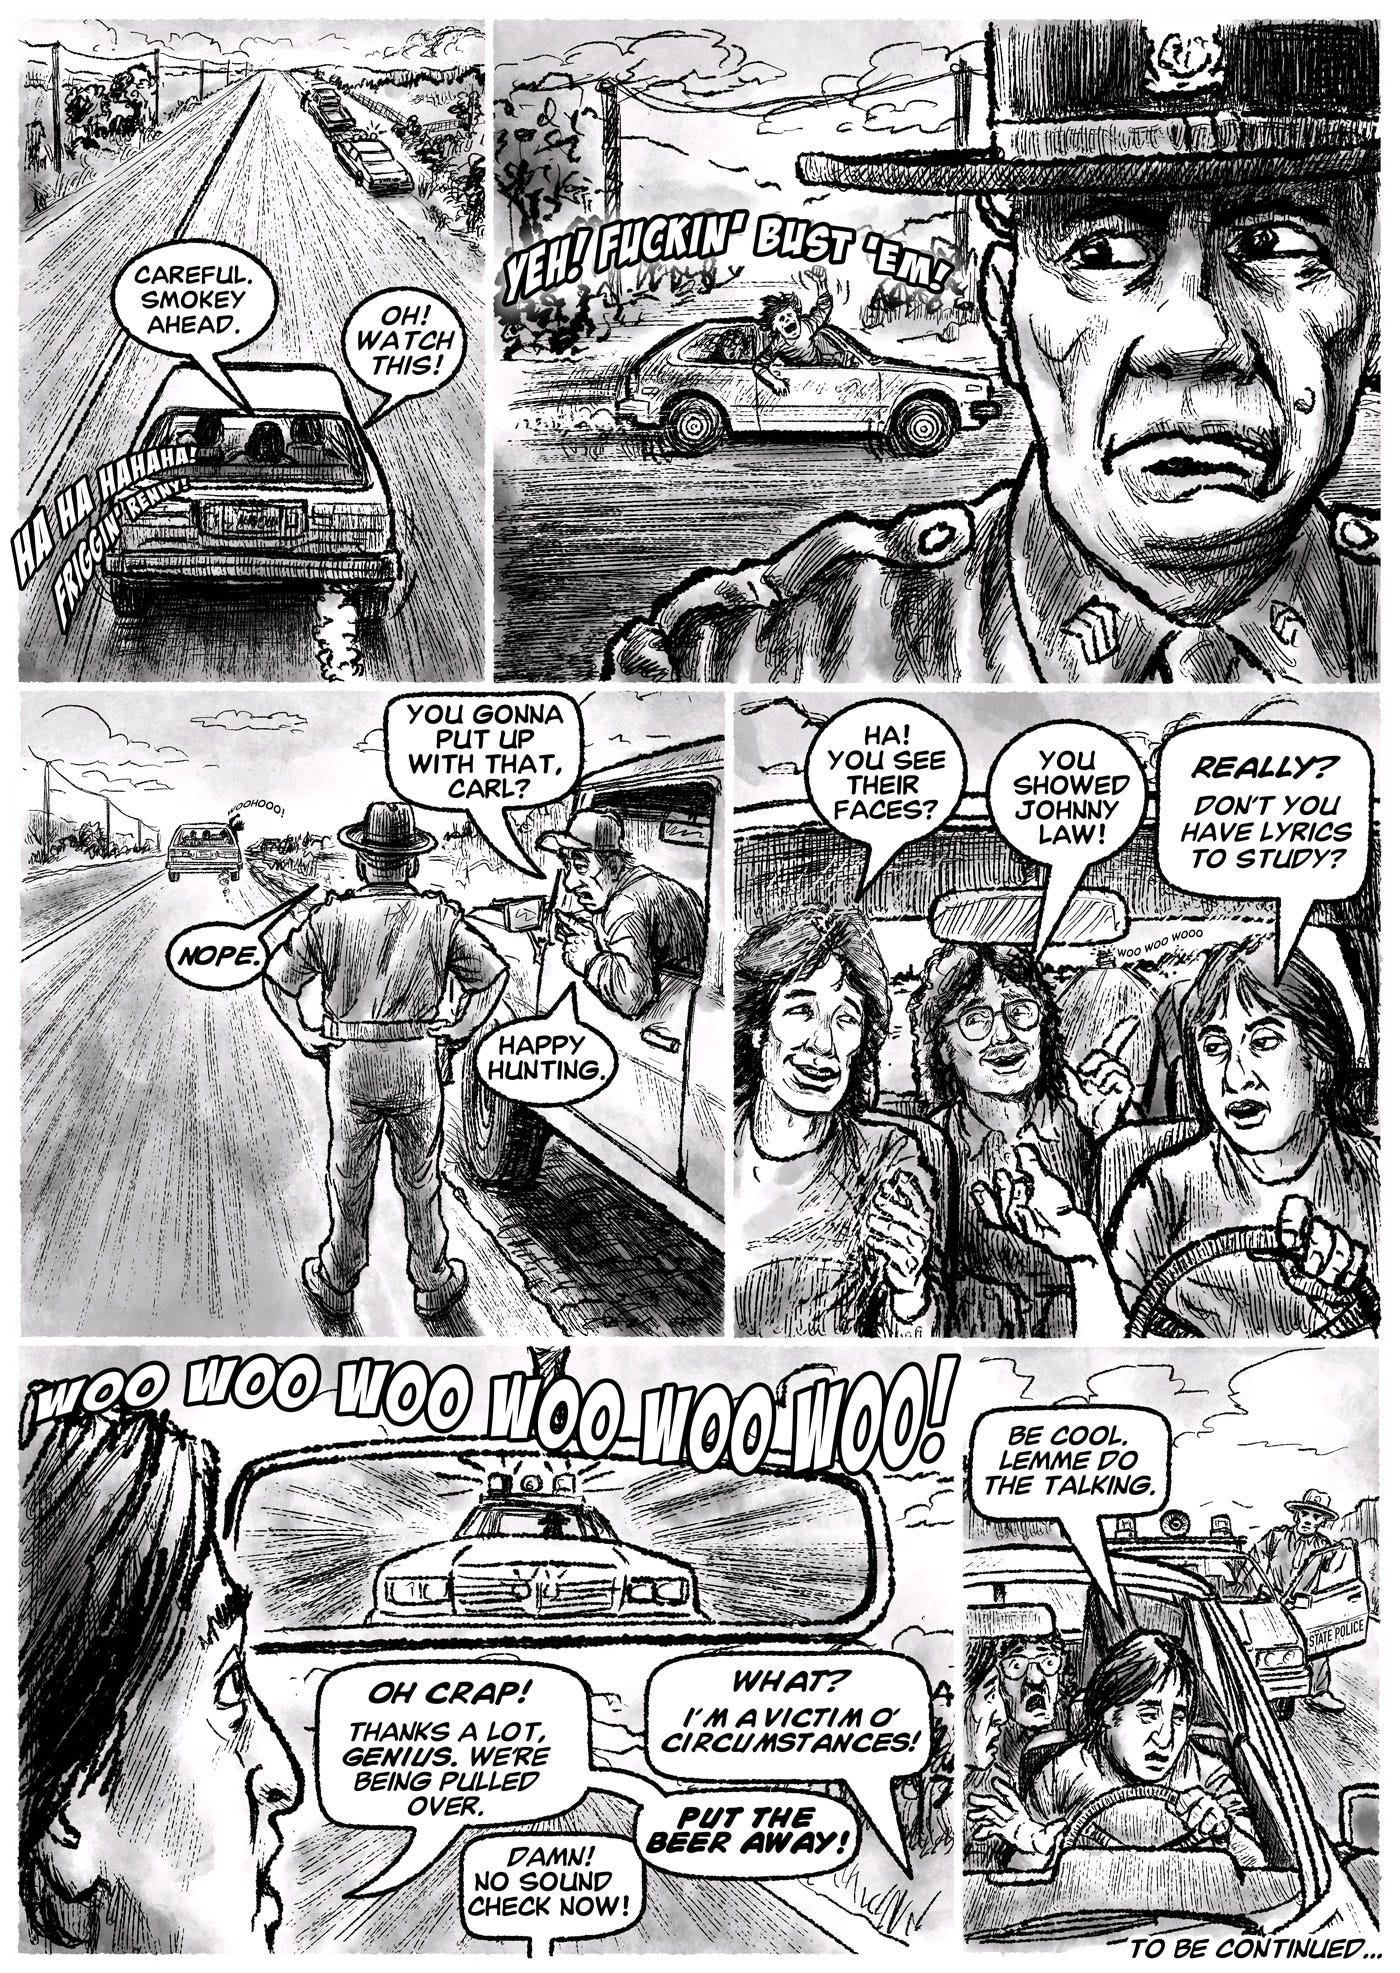 Hammers Stroies-RennysGit Comic by ER Flynn pg2